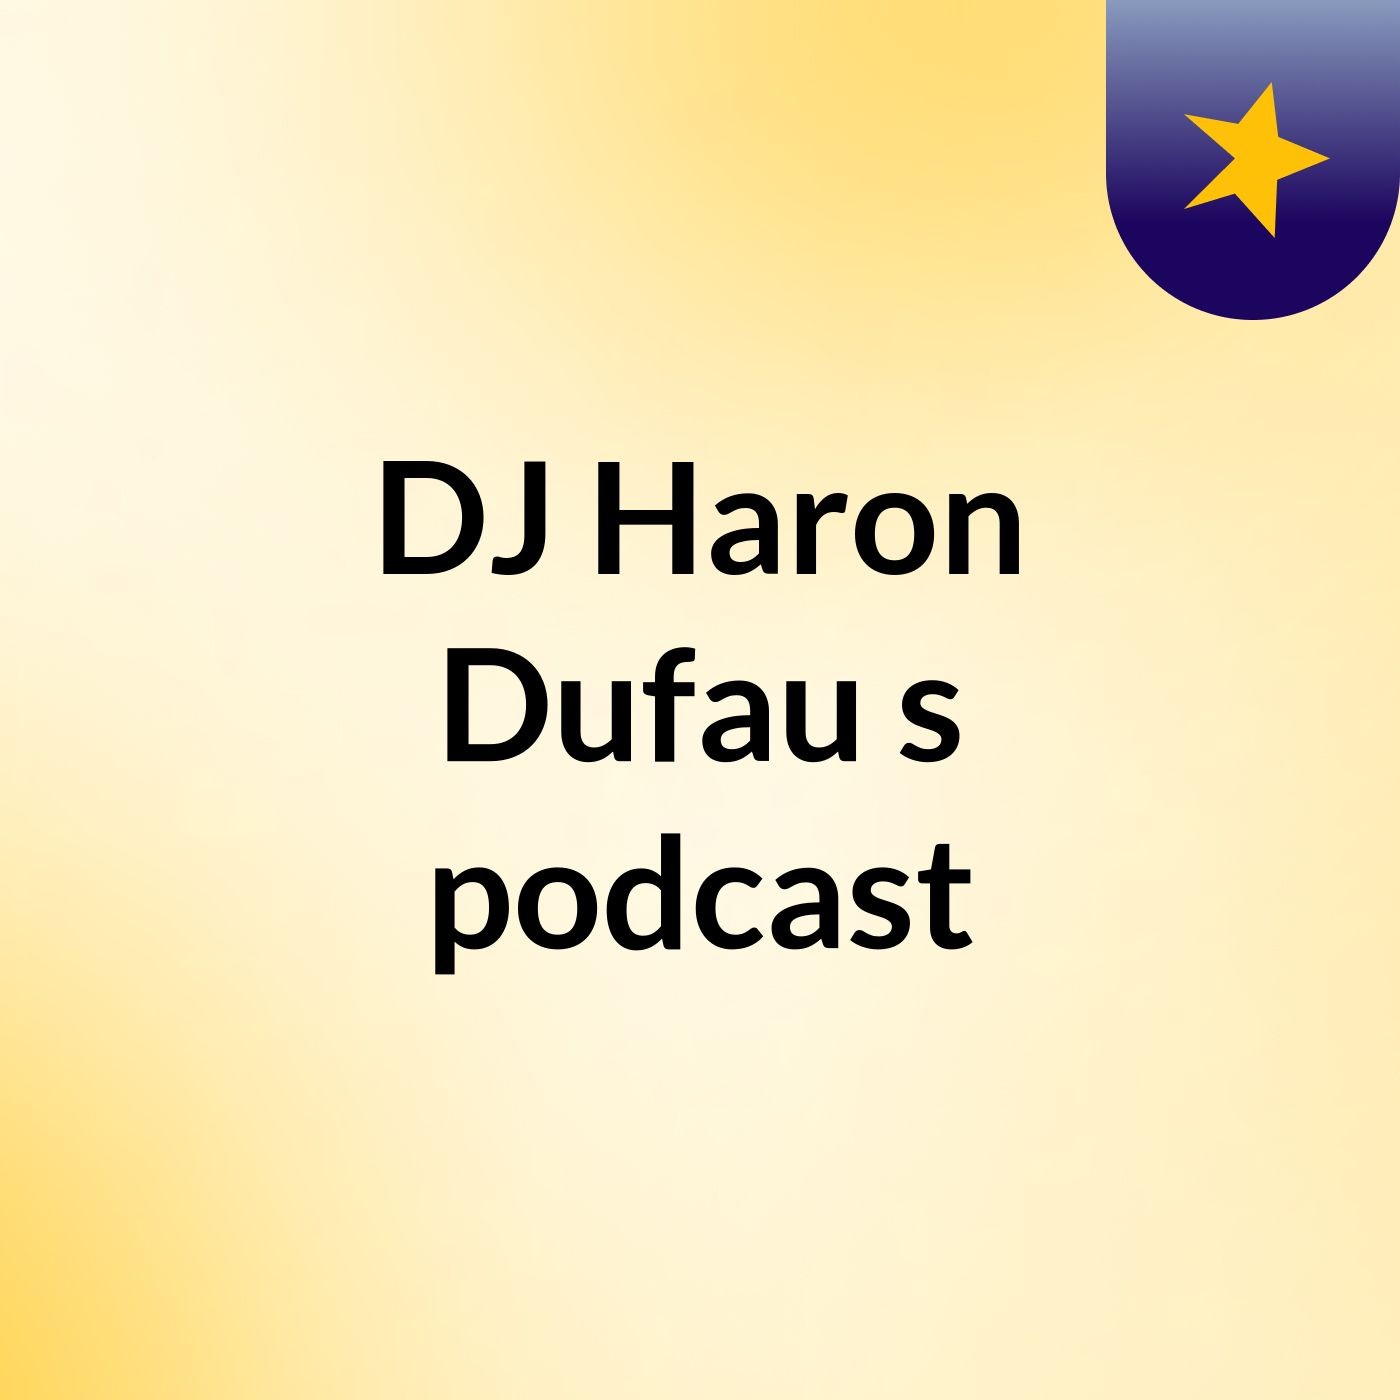 DJ Haron Dufau's podcast